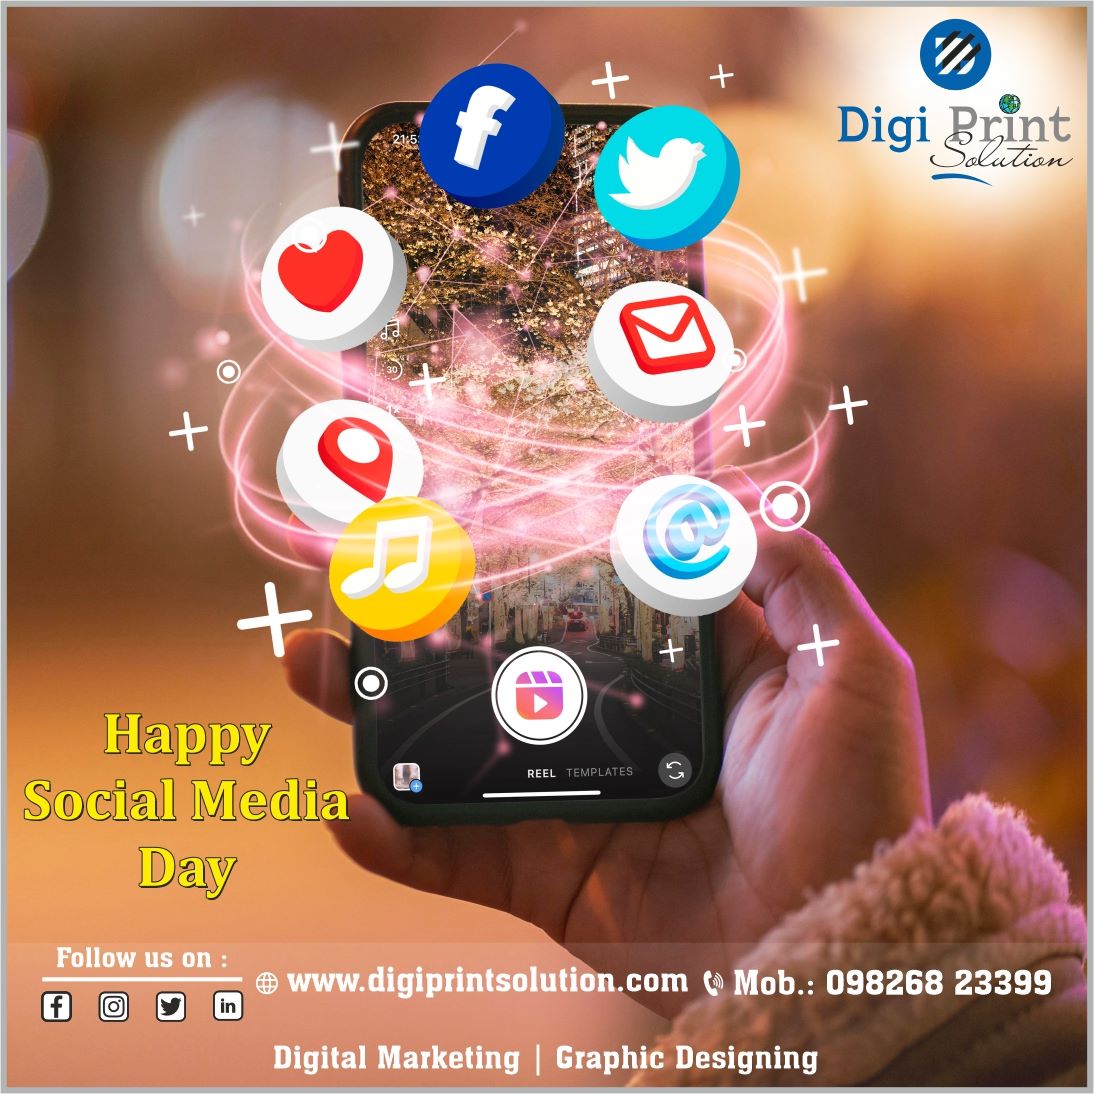 Happy Social Media Day